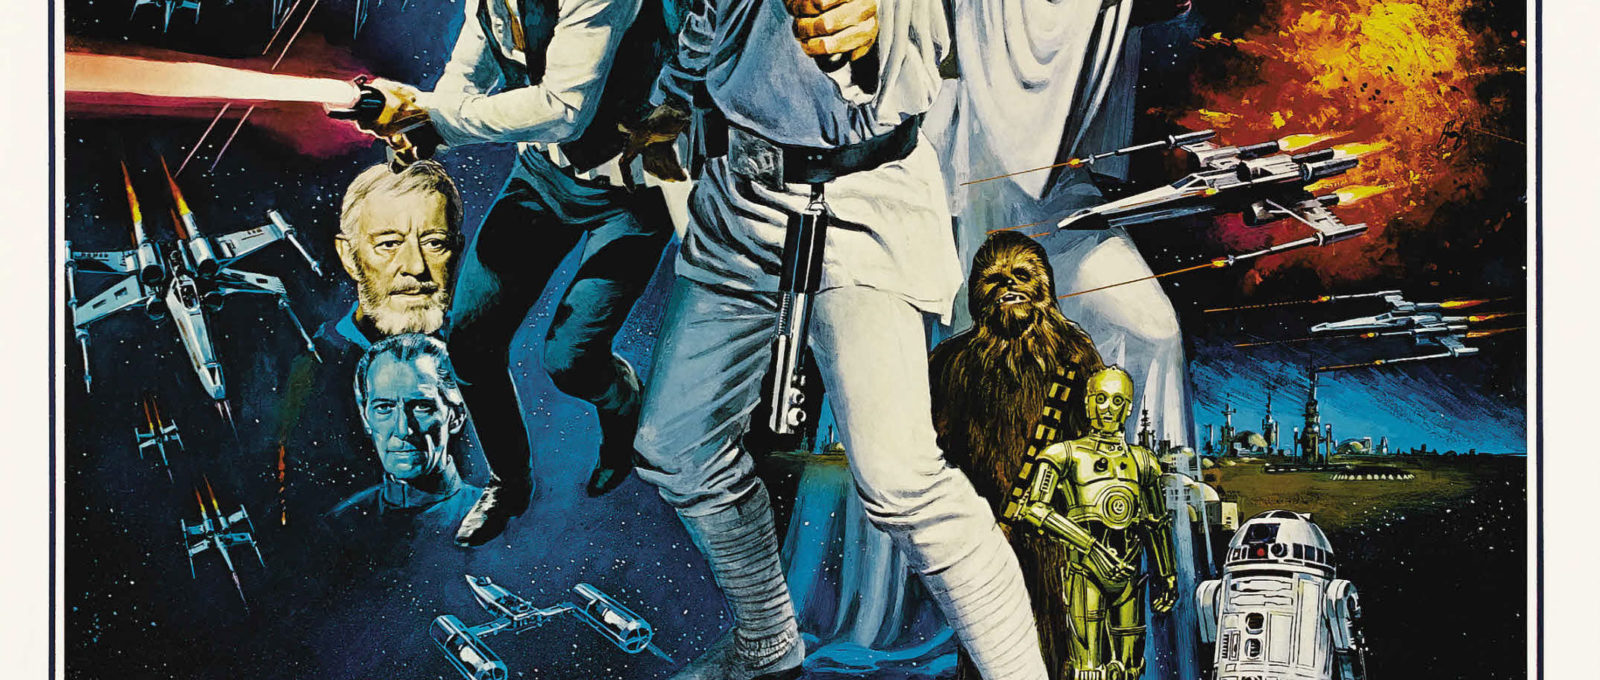 Star Wars movie poster Style C